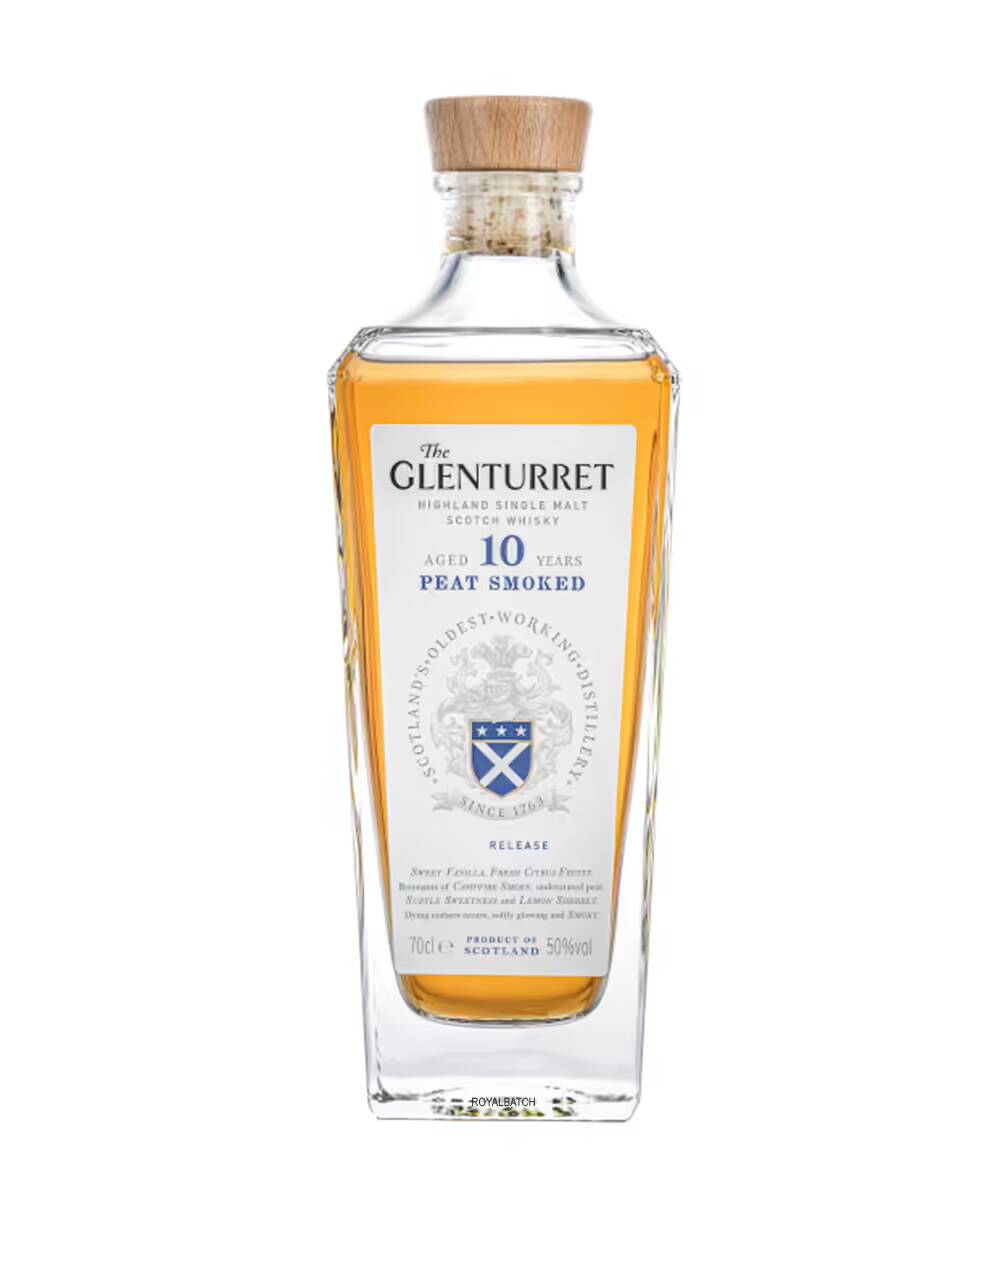 The Glenturret Peat Smoked 10 Year Old Single Malt Scotch Whisky